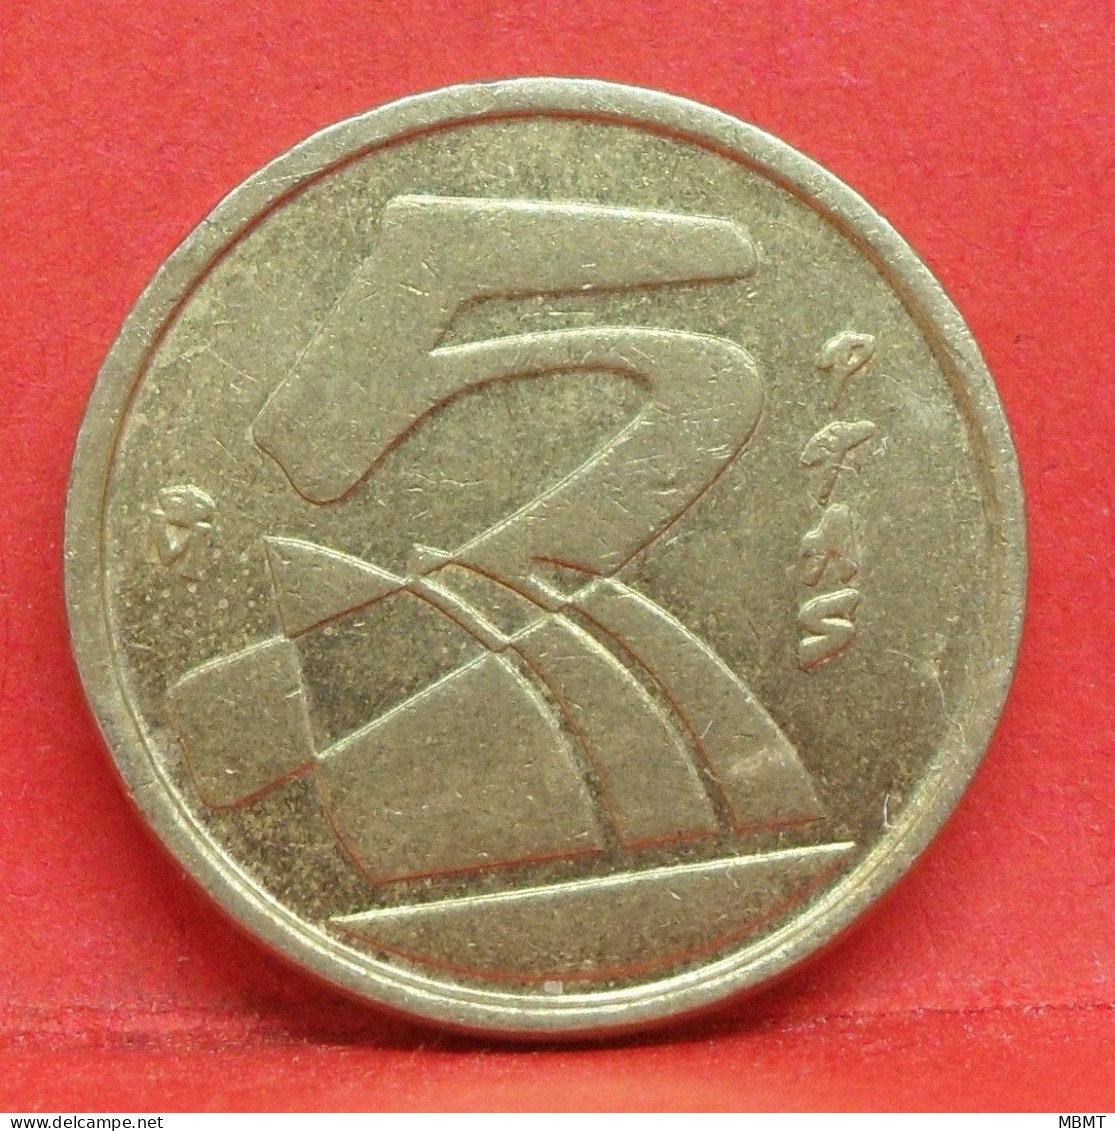 5 Pesetas 1989 - TTB - Pièce Monnaie Espagne - Article N°2394 - 5 Pesetas